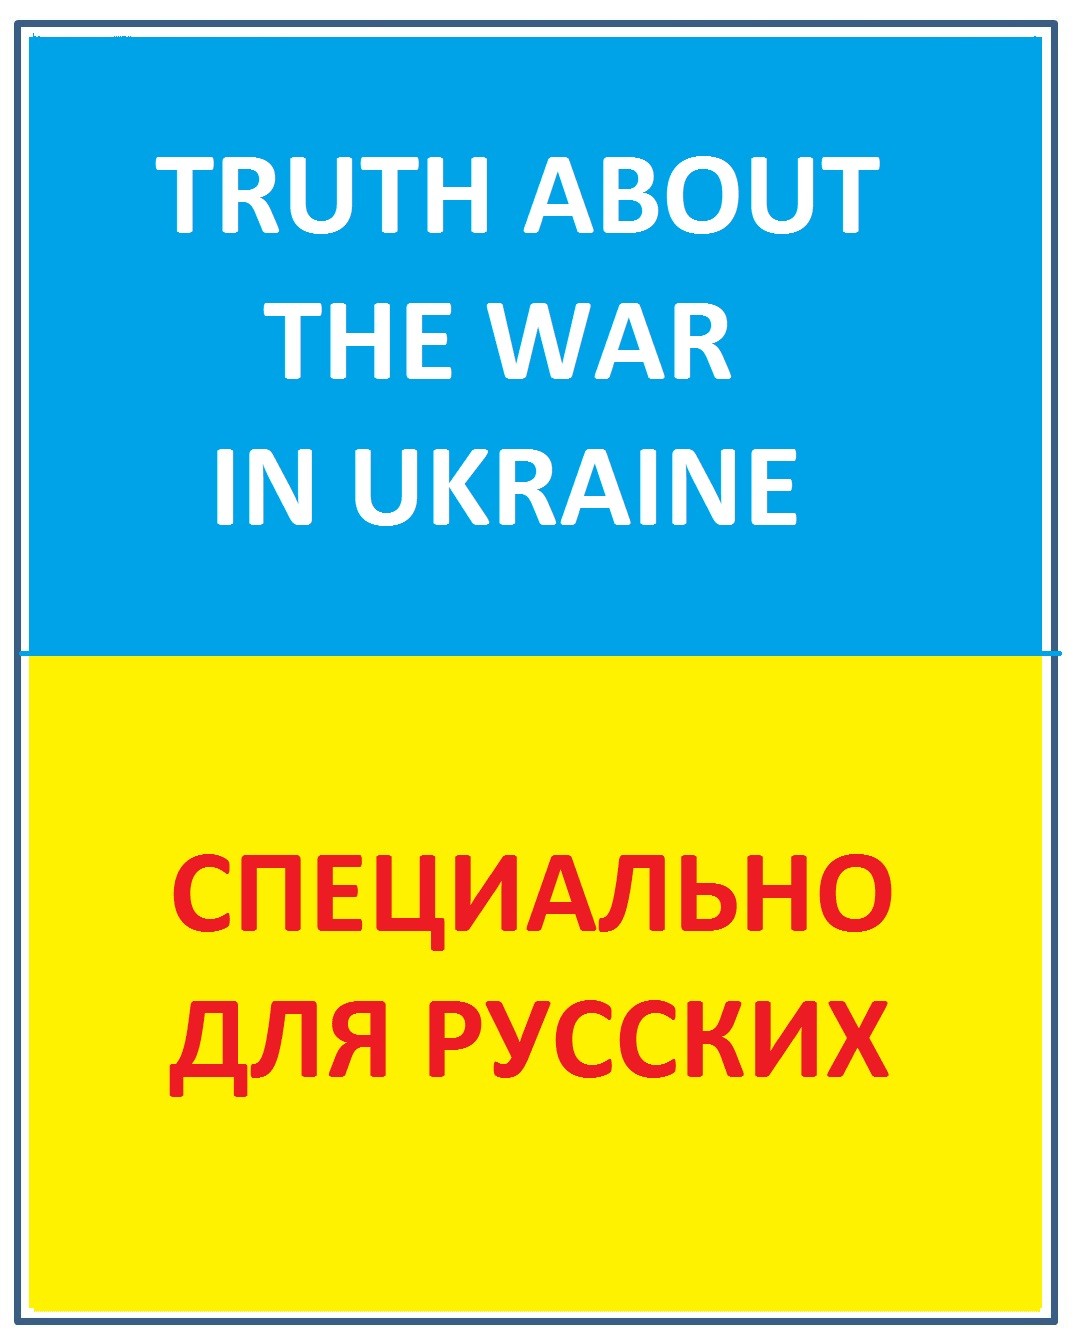 TRUTH ABOUT THE WAR IN UKRAINE